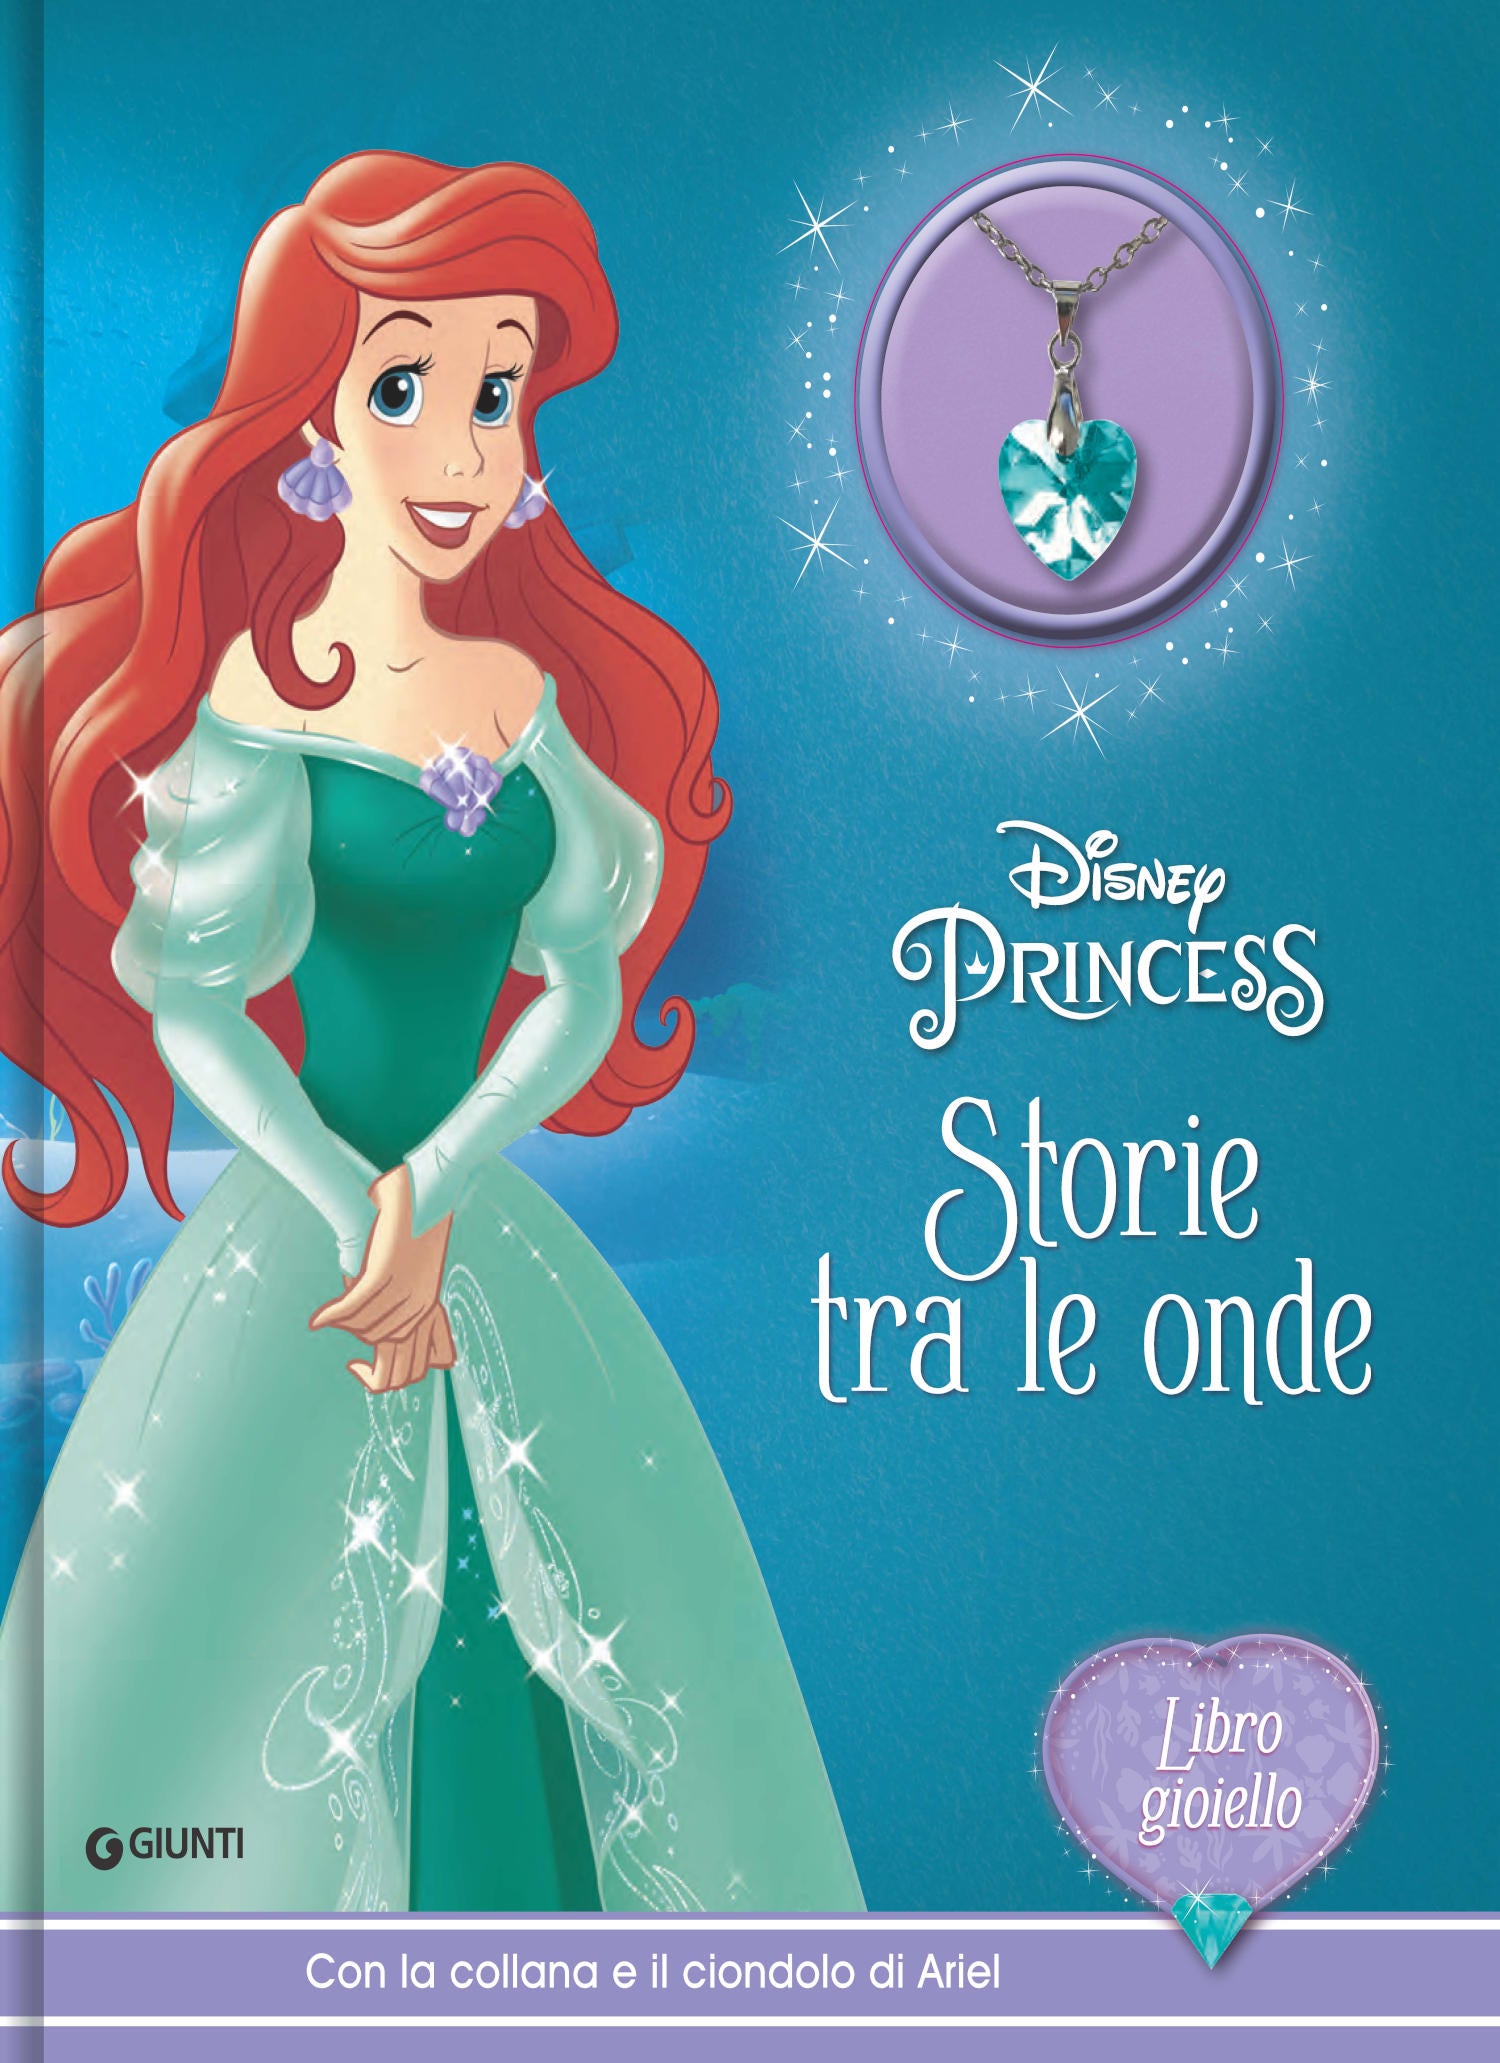 Disney Princess Storie tra le onde. Libro Gioiello: libro di Walt